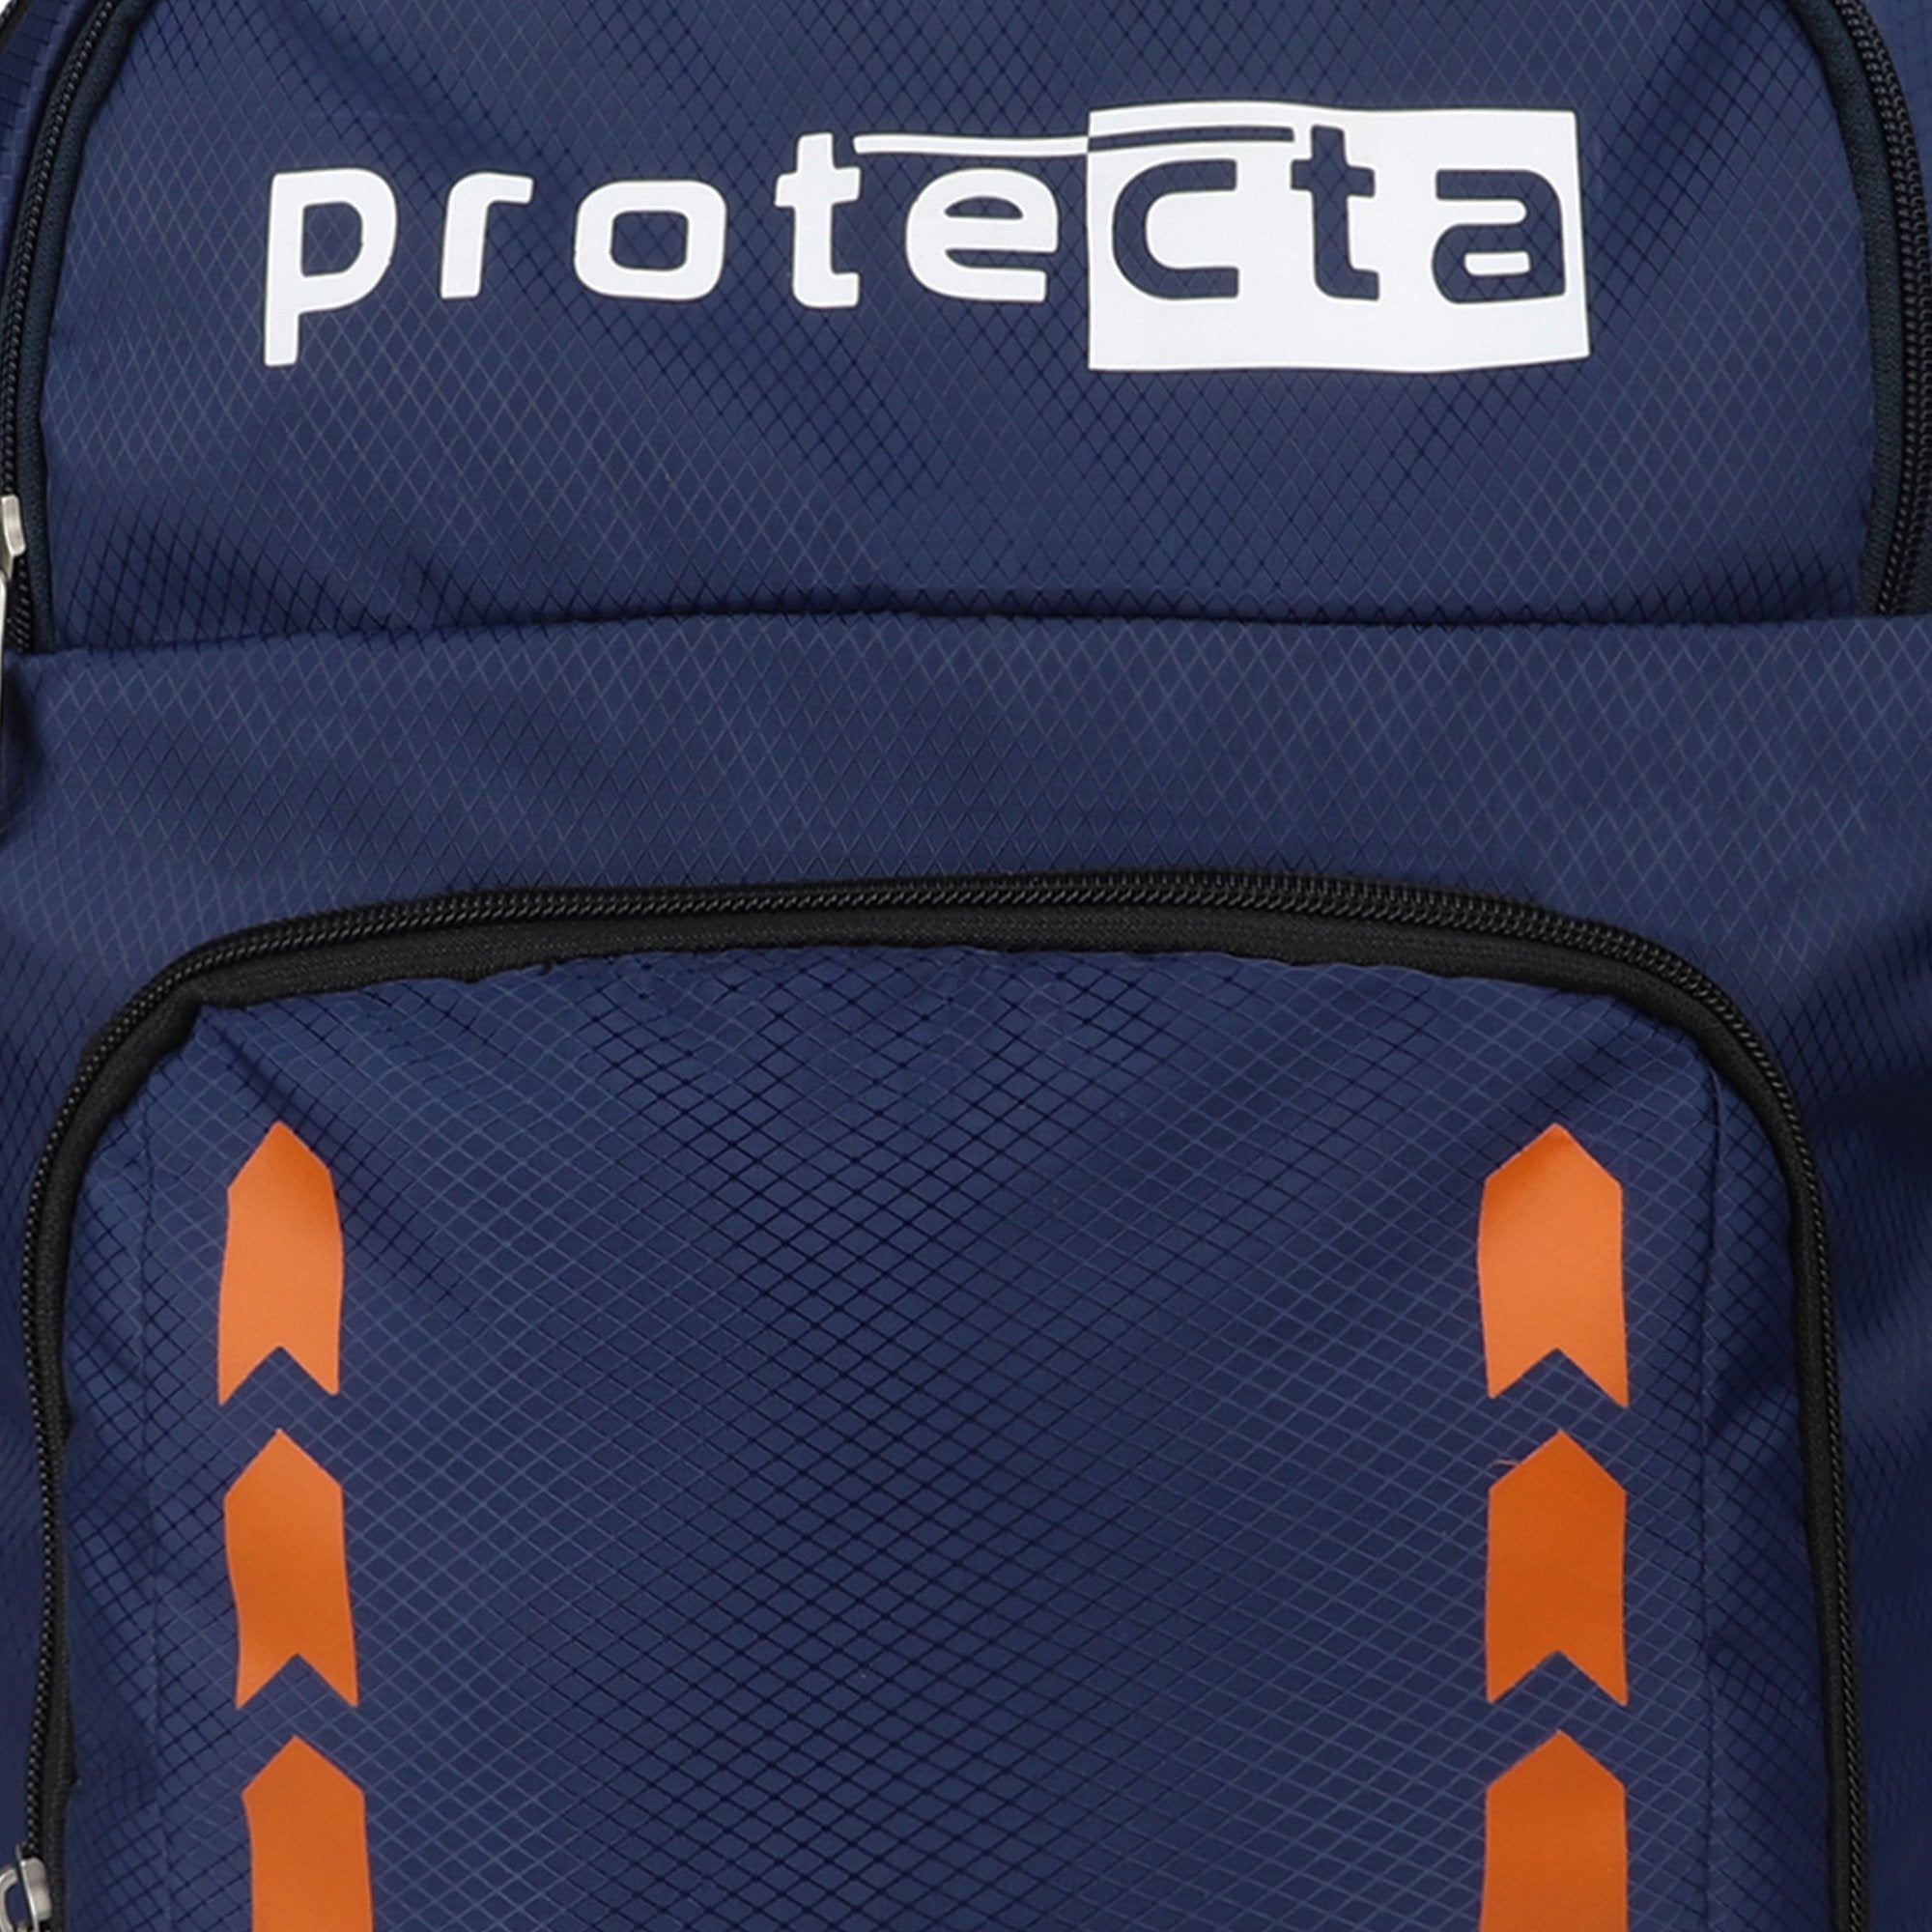 Navy | Protecta Bolt Laptop Backpack-6